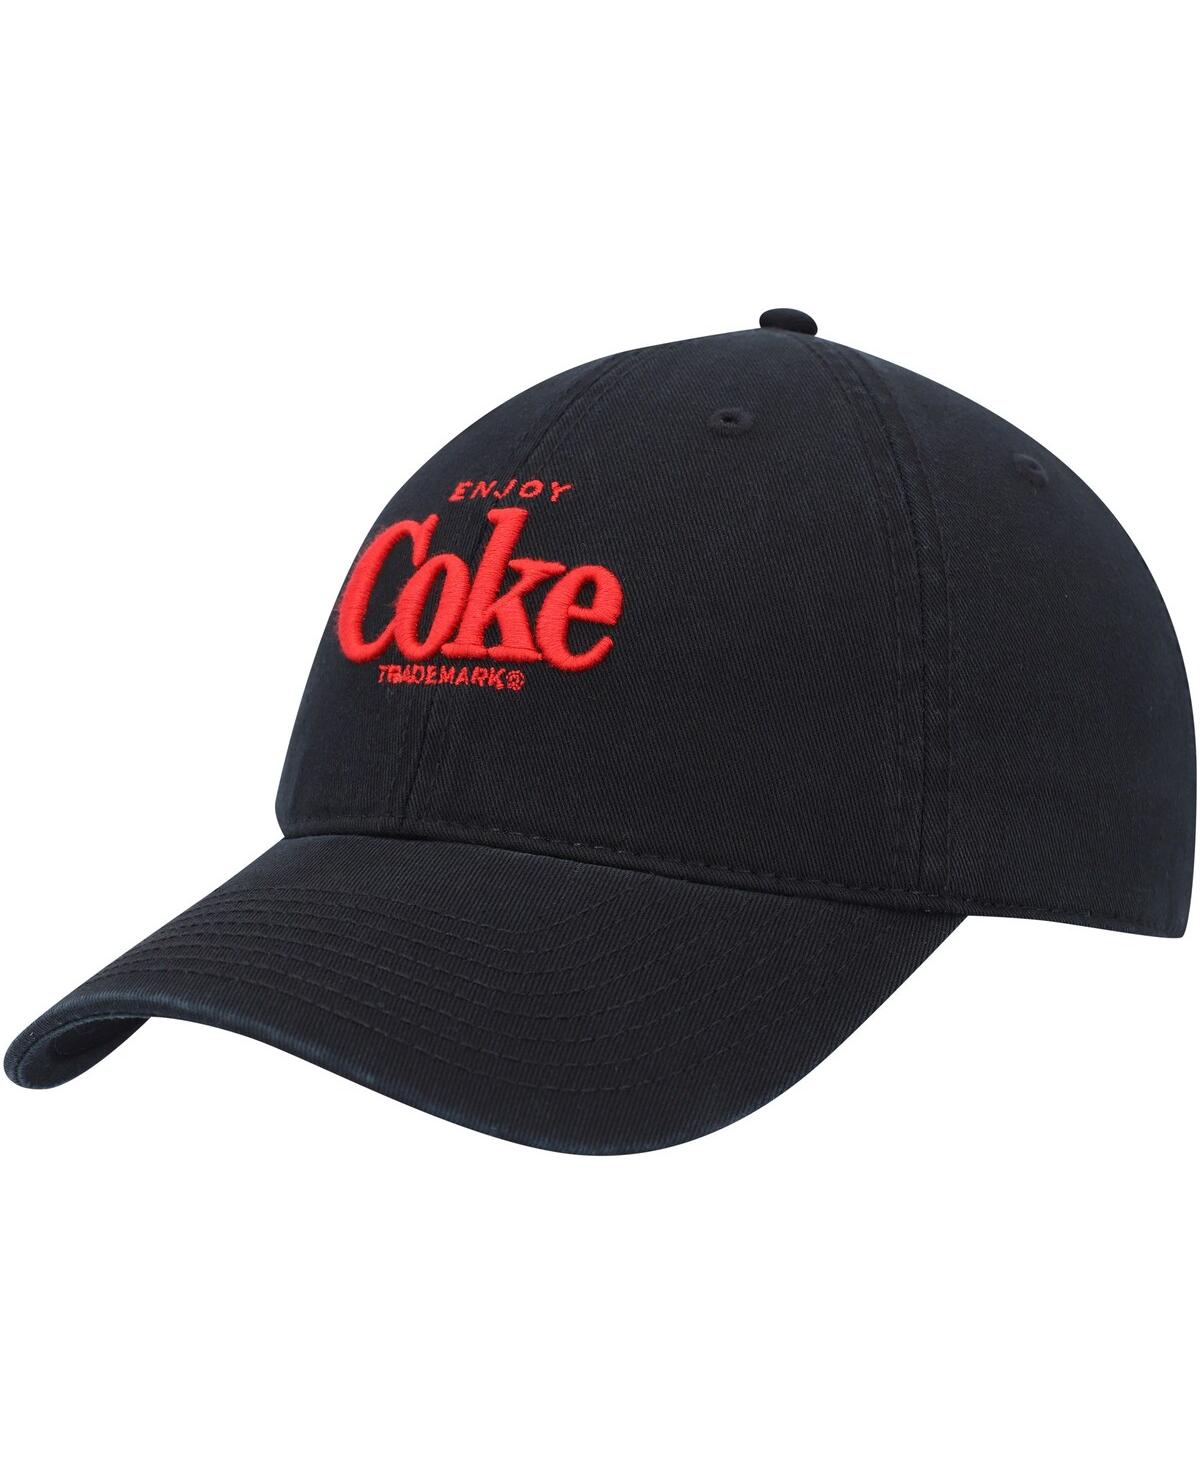 Men's American Needle Black Coca-Cola Ballpark Adjustable Hat - Black